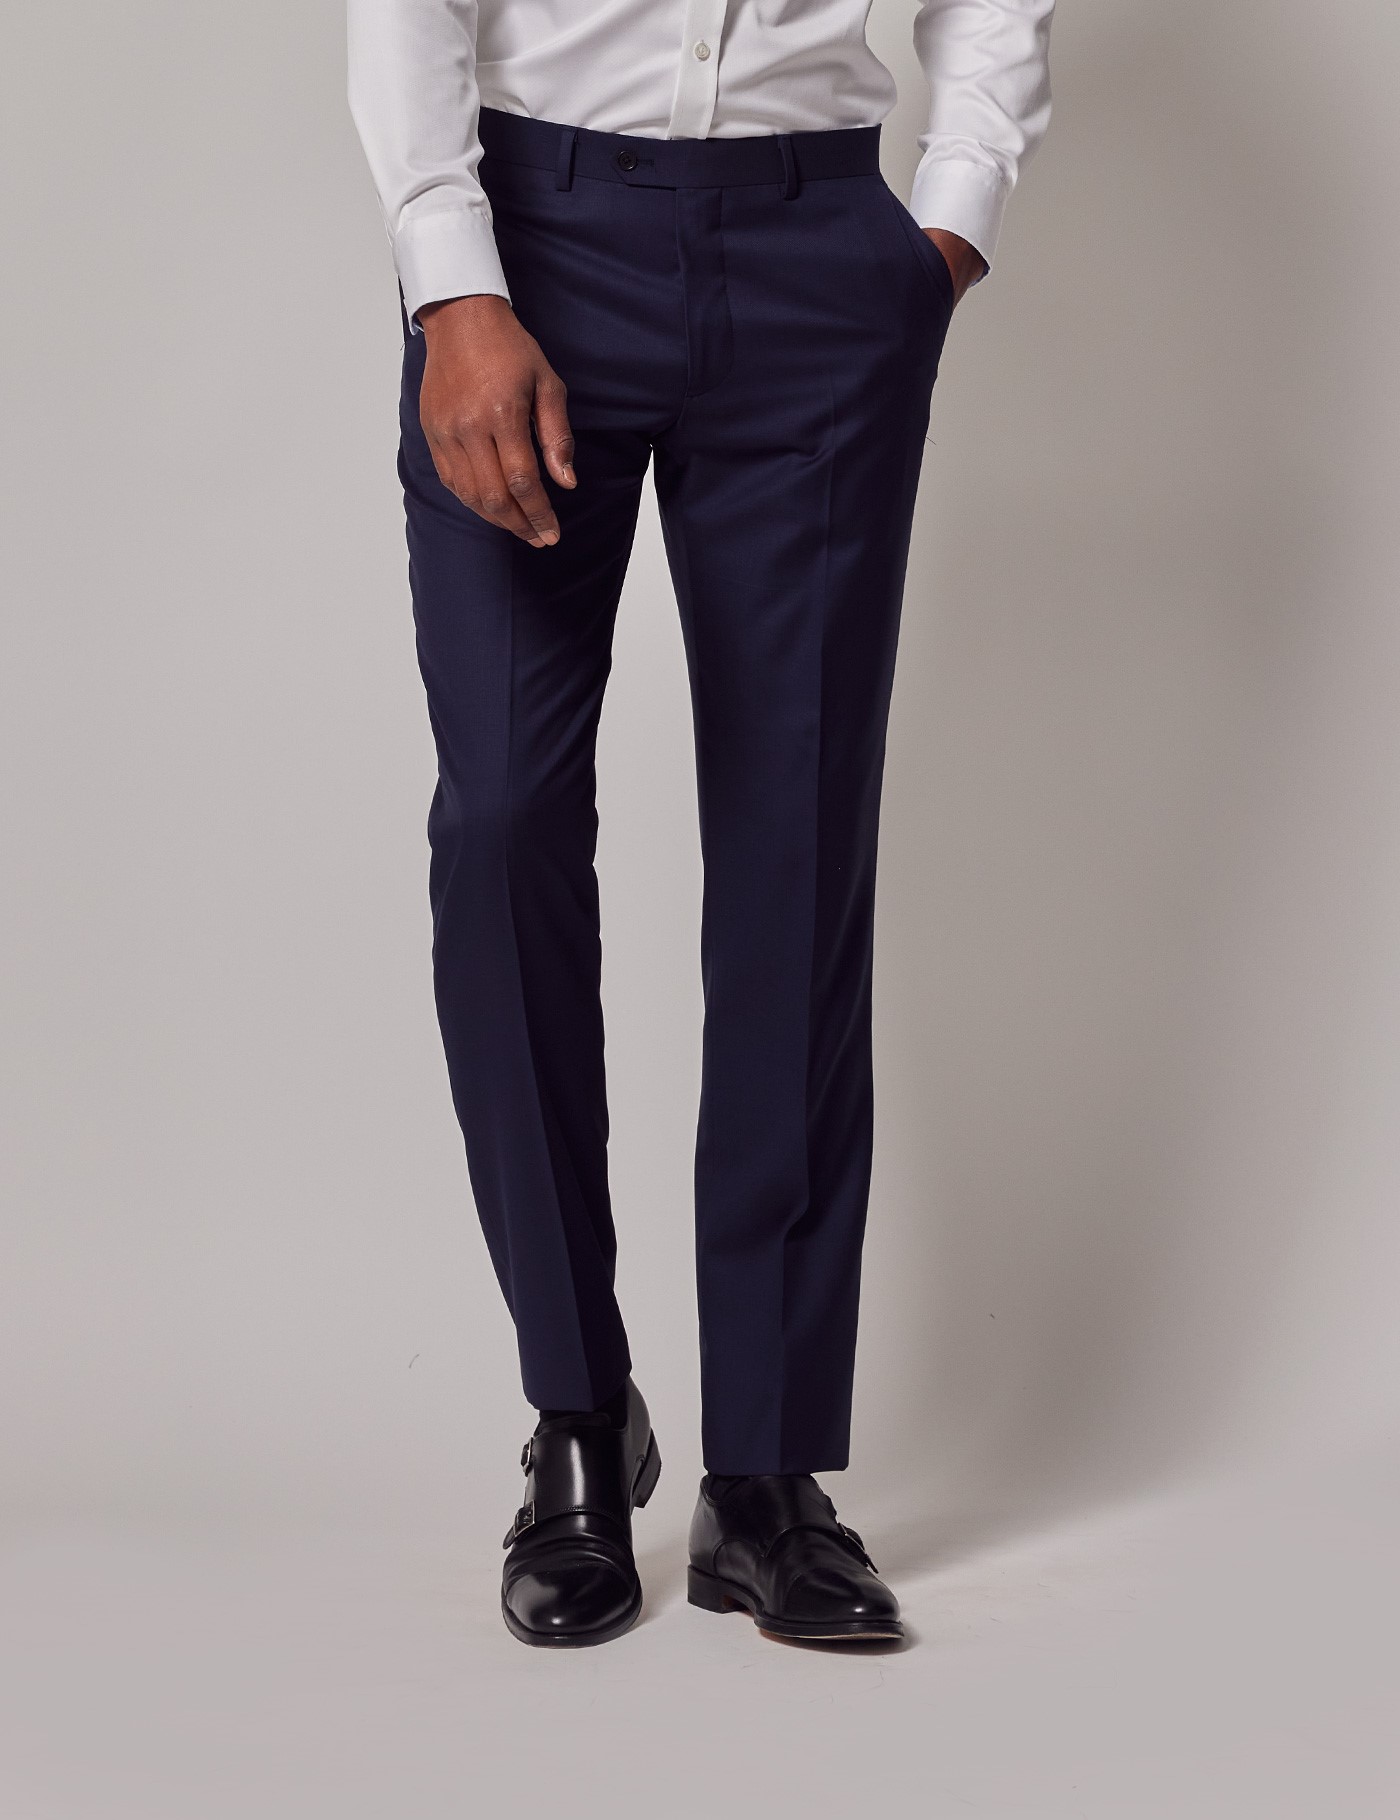 Ludlow Slim-fit suit pant in Italian stretch four-season wool blend | Slim  fit suit pants, Slim fit dress pants, Slim fit suit